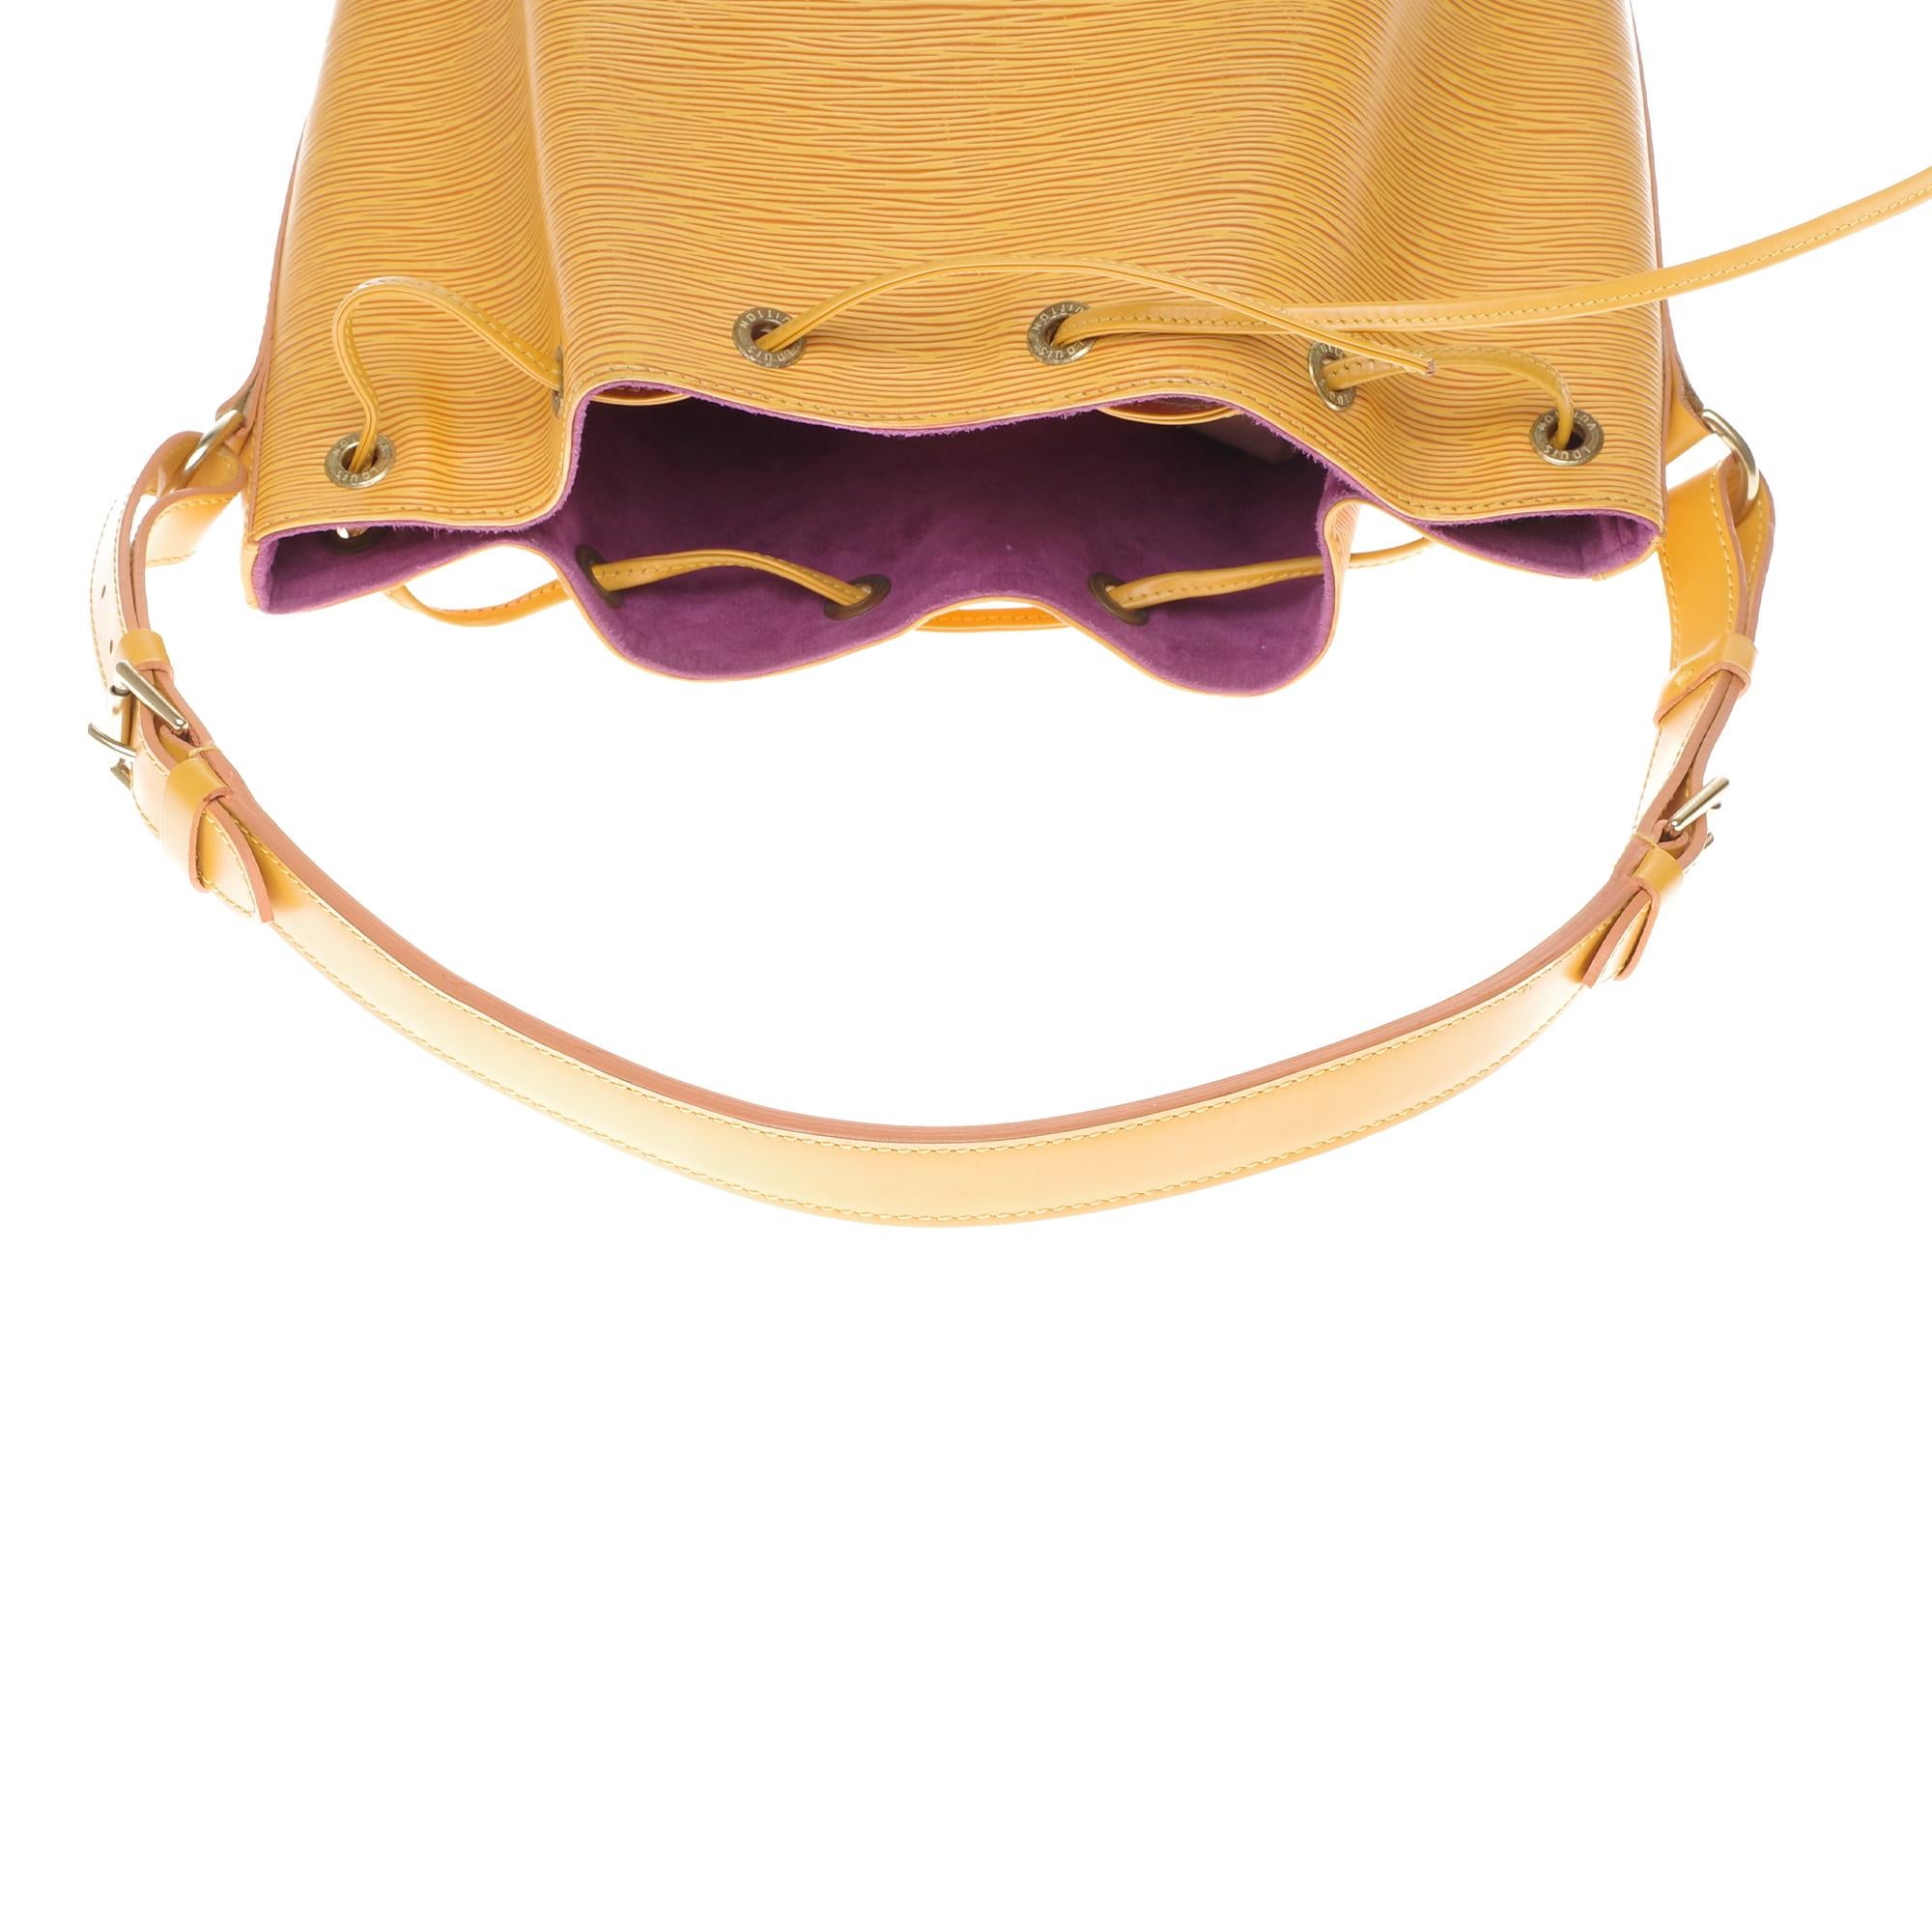 Louis Vuitton Noé PM shoulder bag in yellow epi leather, gold hardware 3